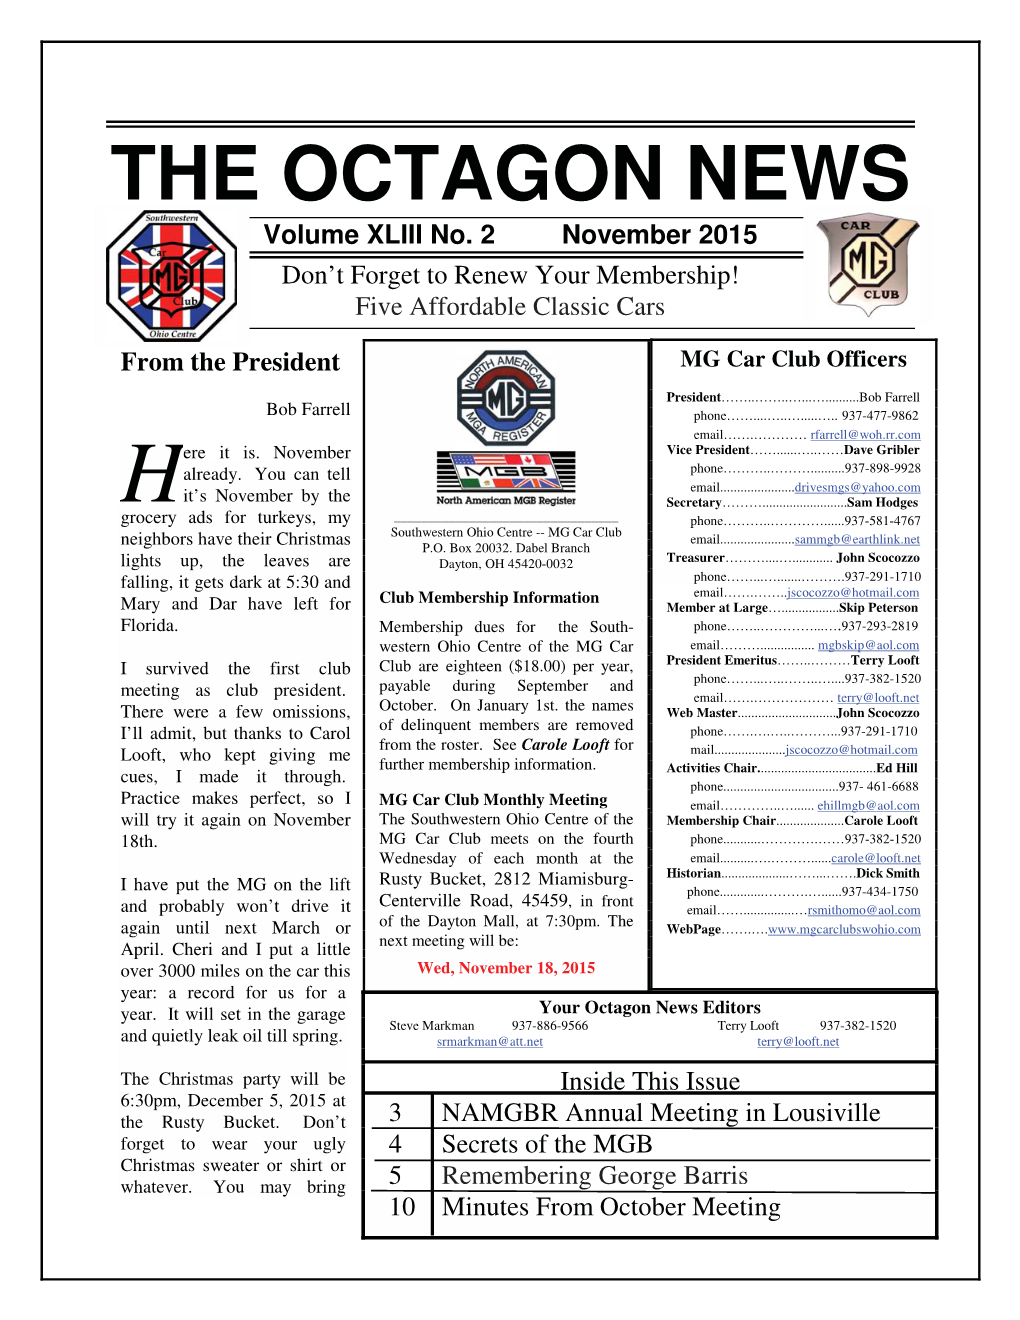 THE OCTAGON NEWS Volume XLIII No